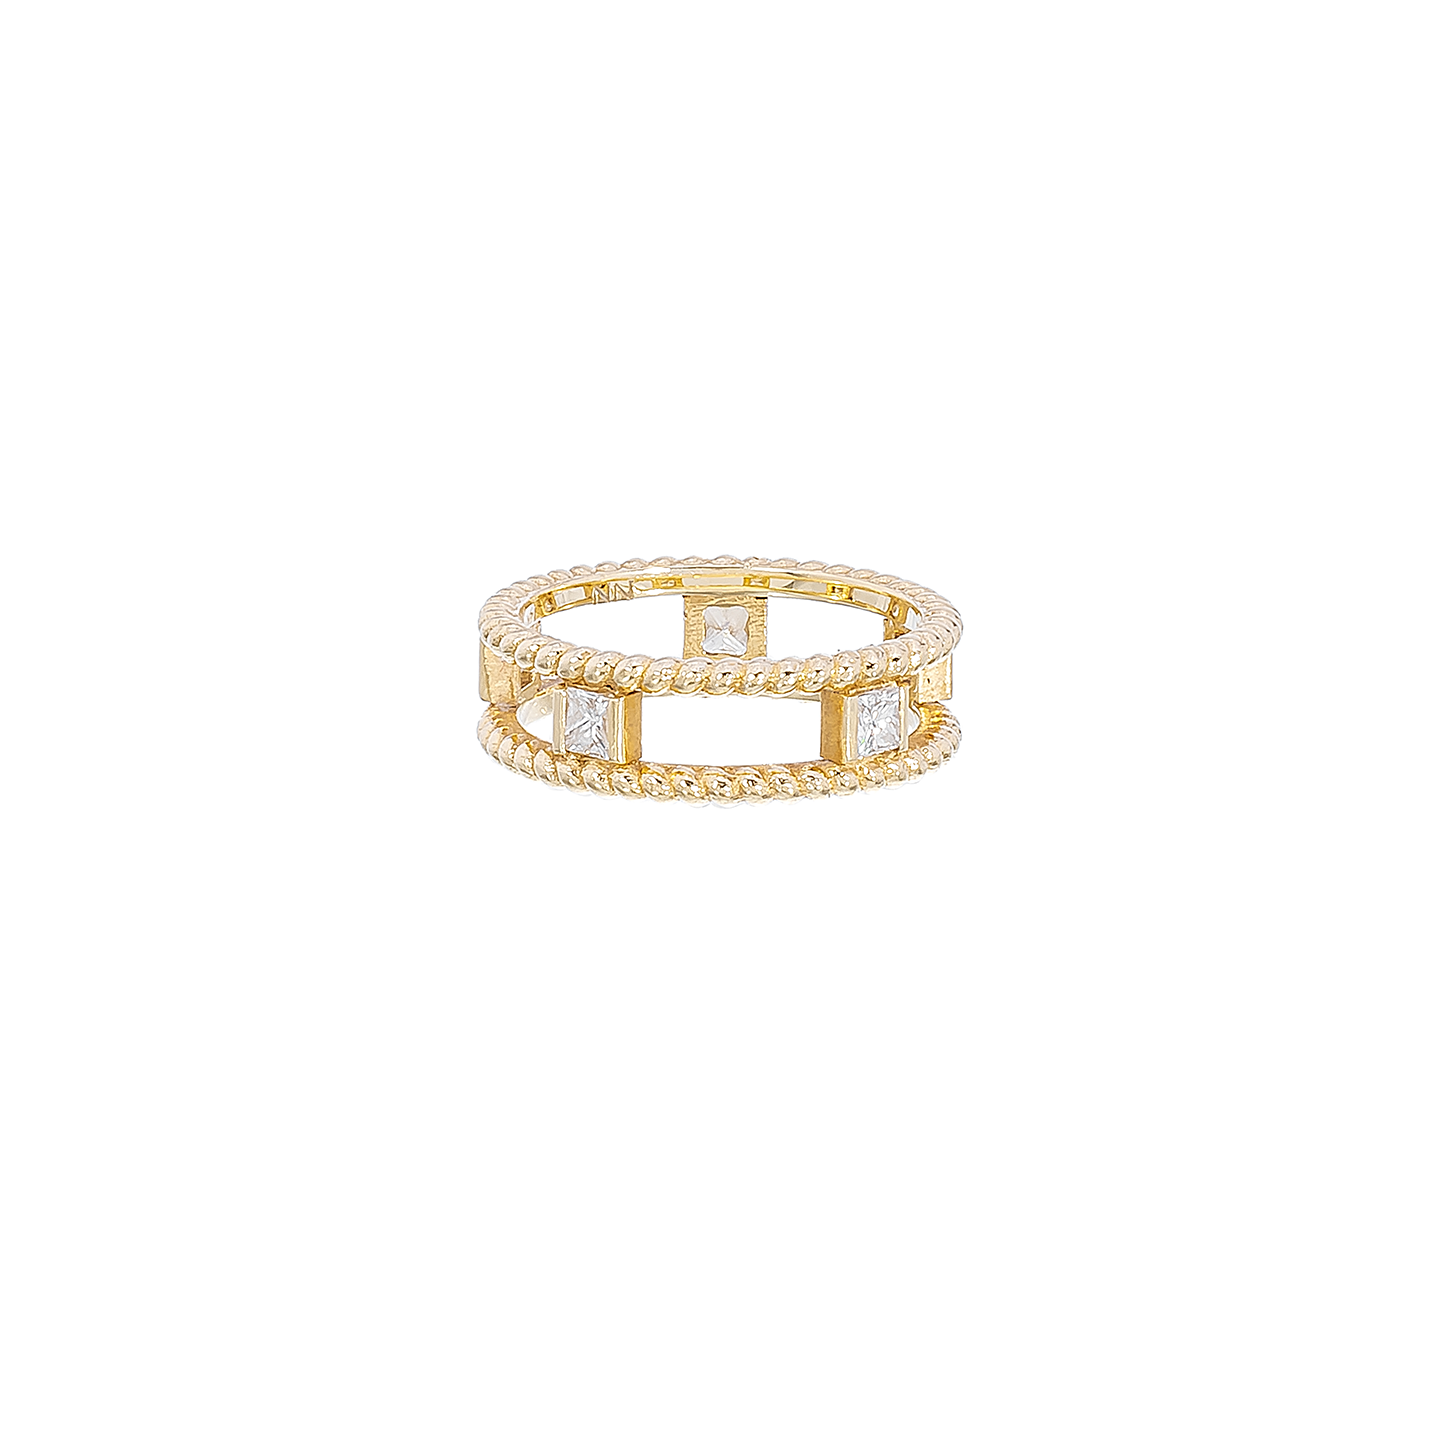 Nancy Newberg Gold and Diamond Twist Ring